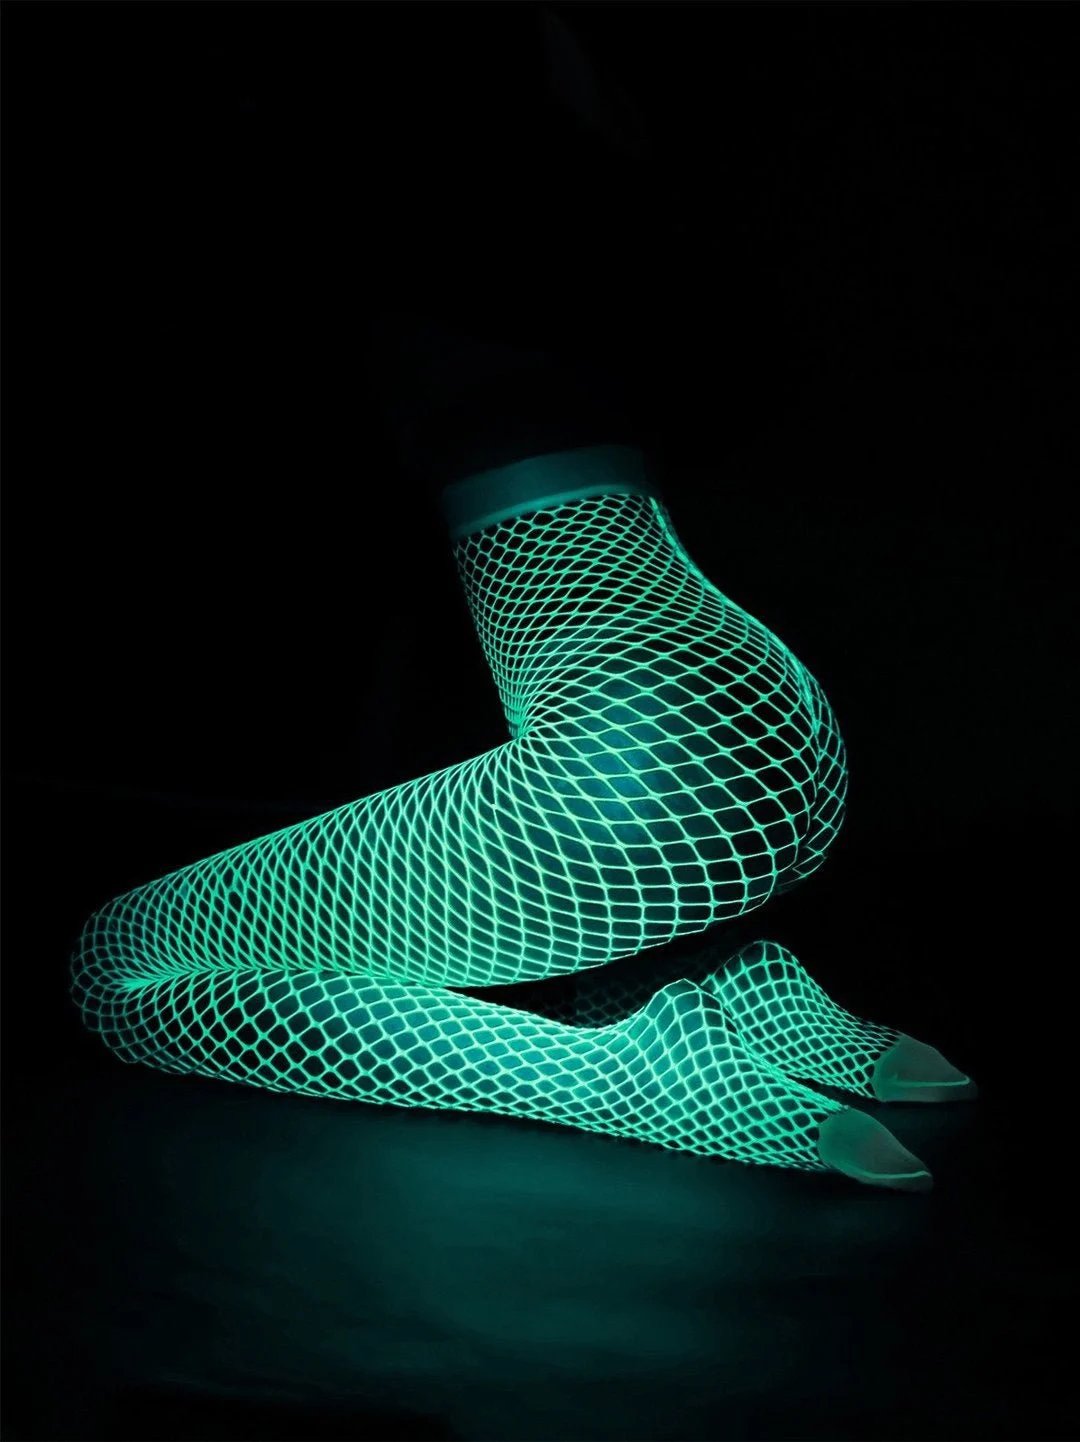 🔥Last Day Promotion 50% OFF💋2023 Luminous Fishnet Stockings - BUY 2 GET 1 FREE(3 PCS)